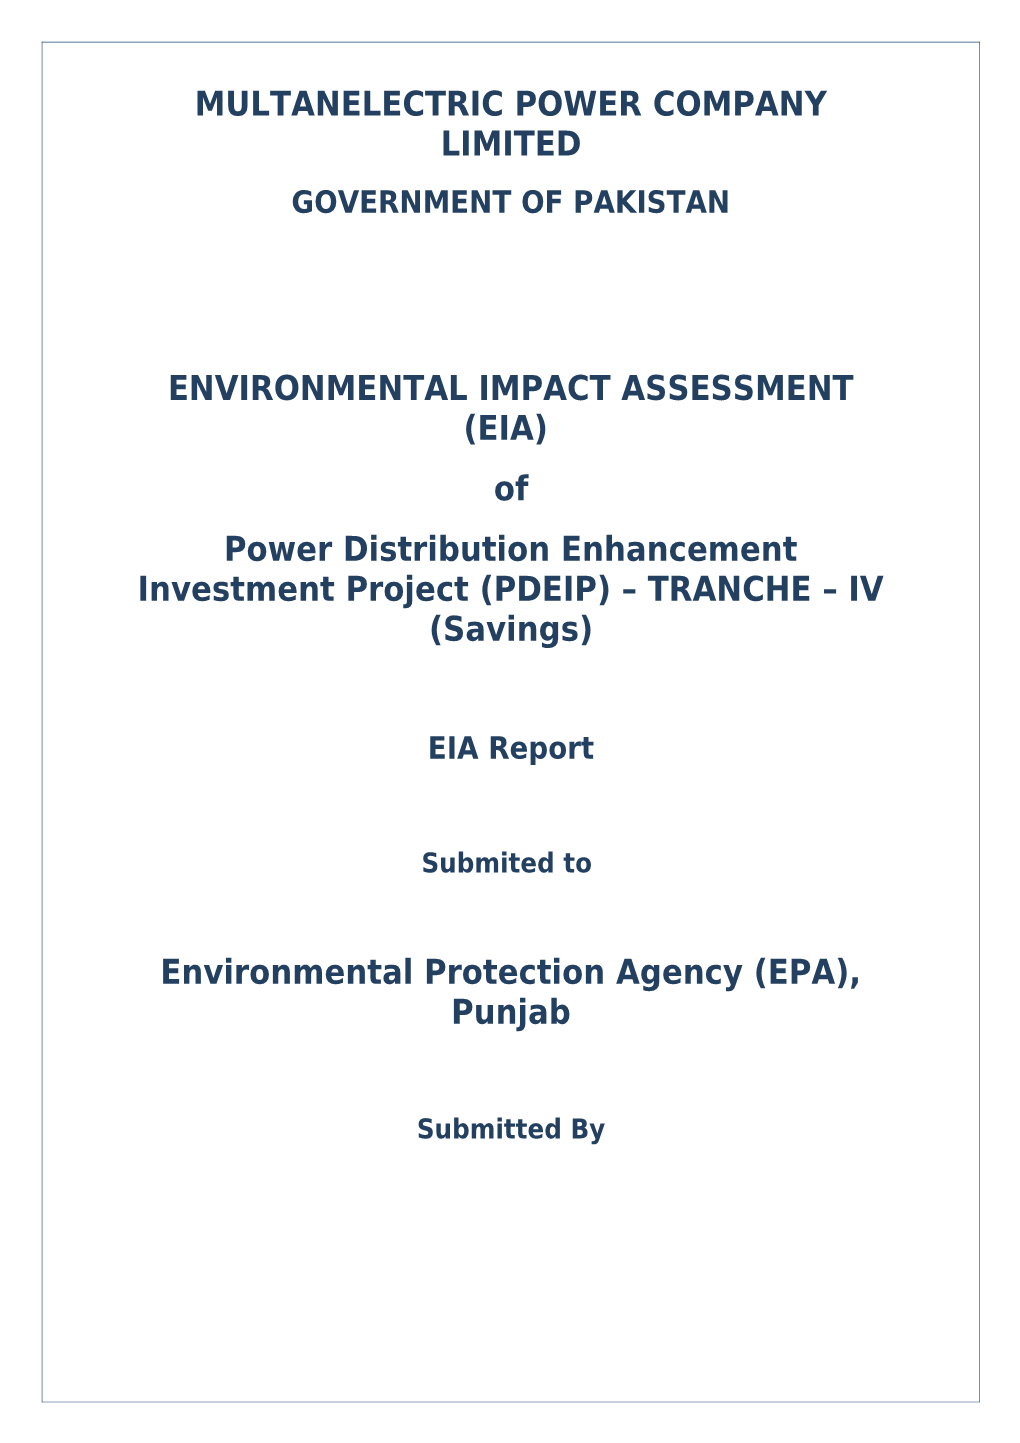 Multan Electric Power Company (MEPCO)Environmental Impact Assessment